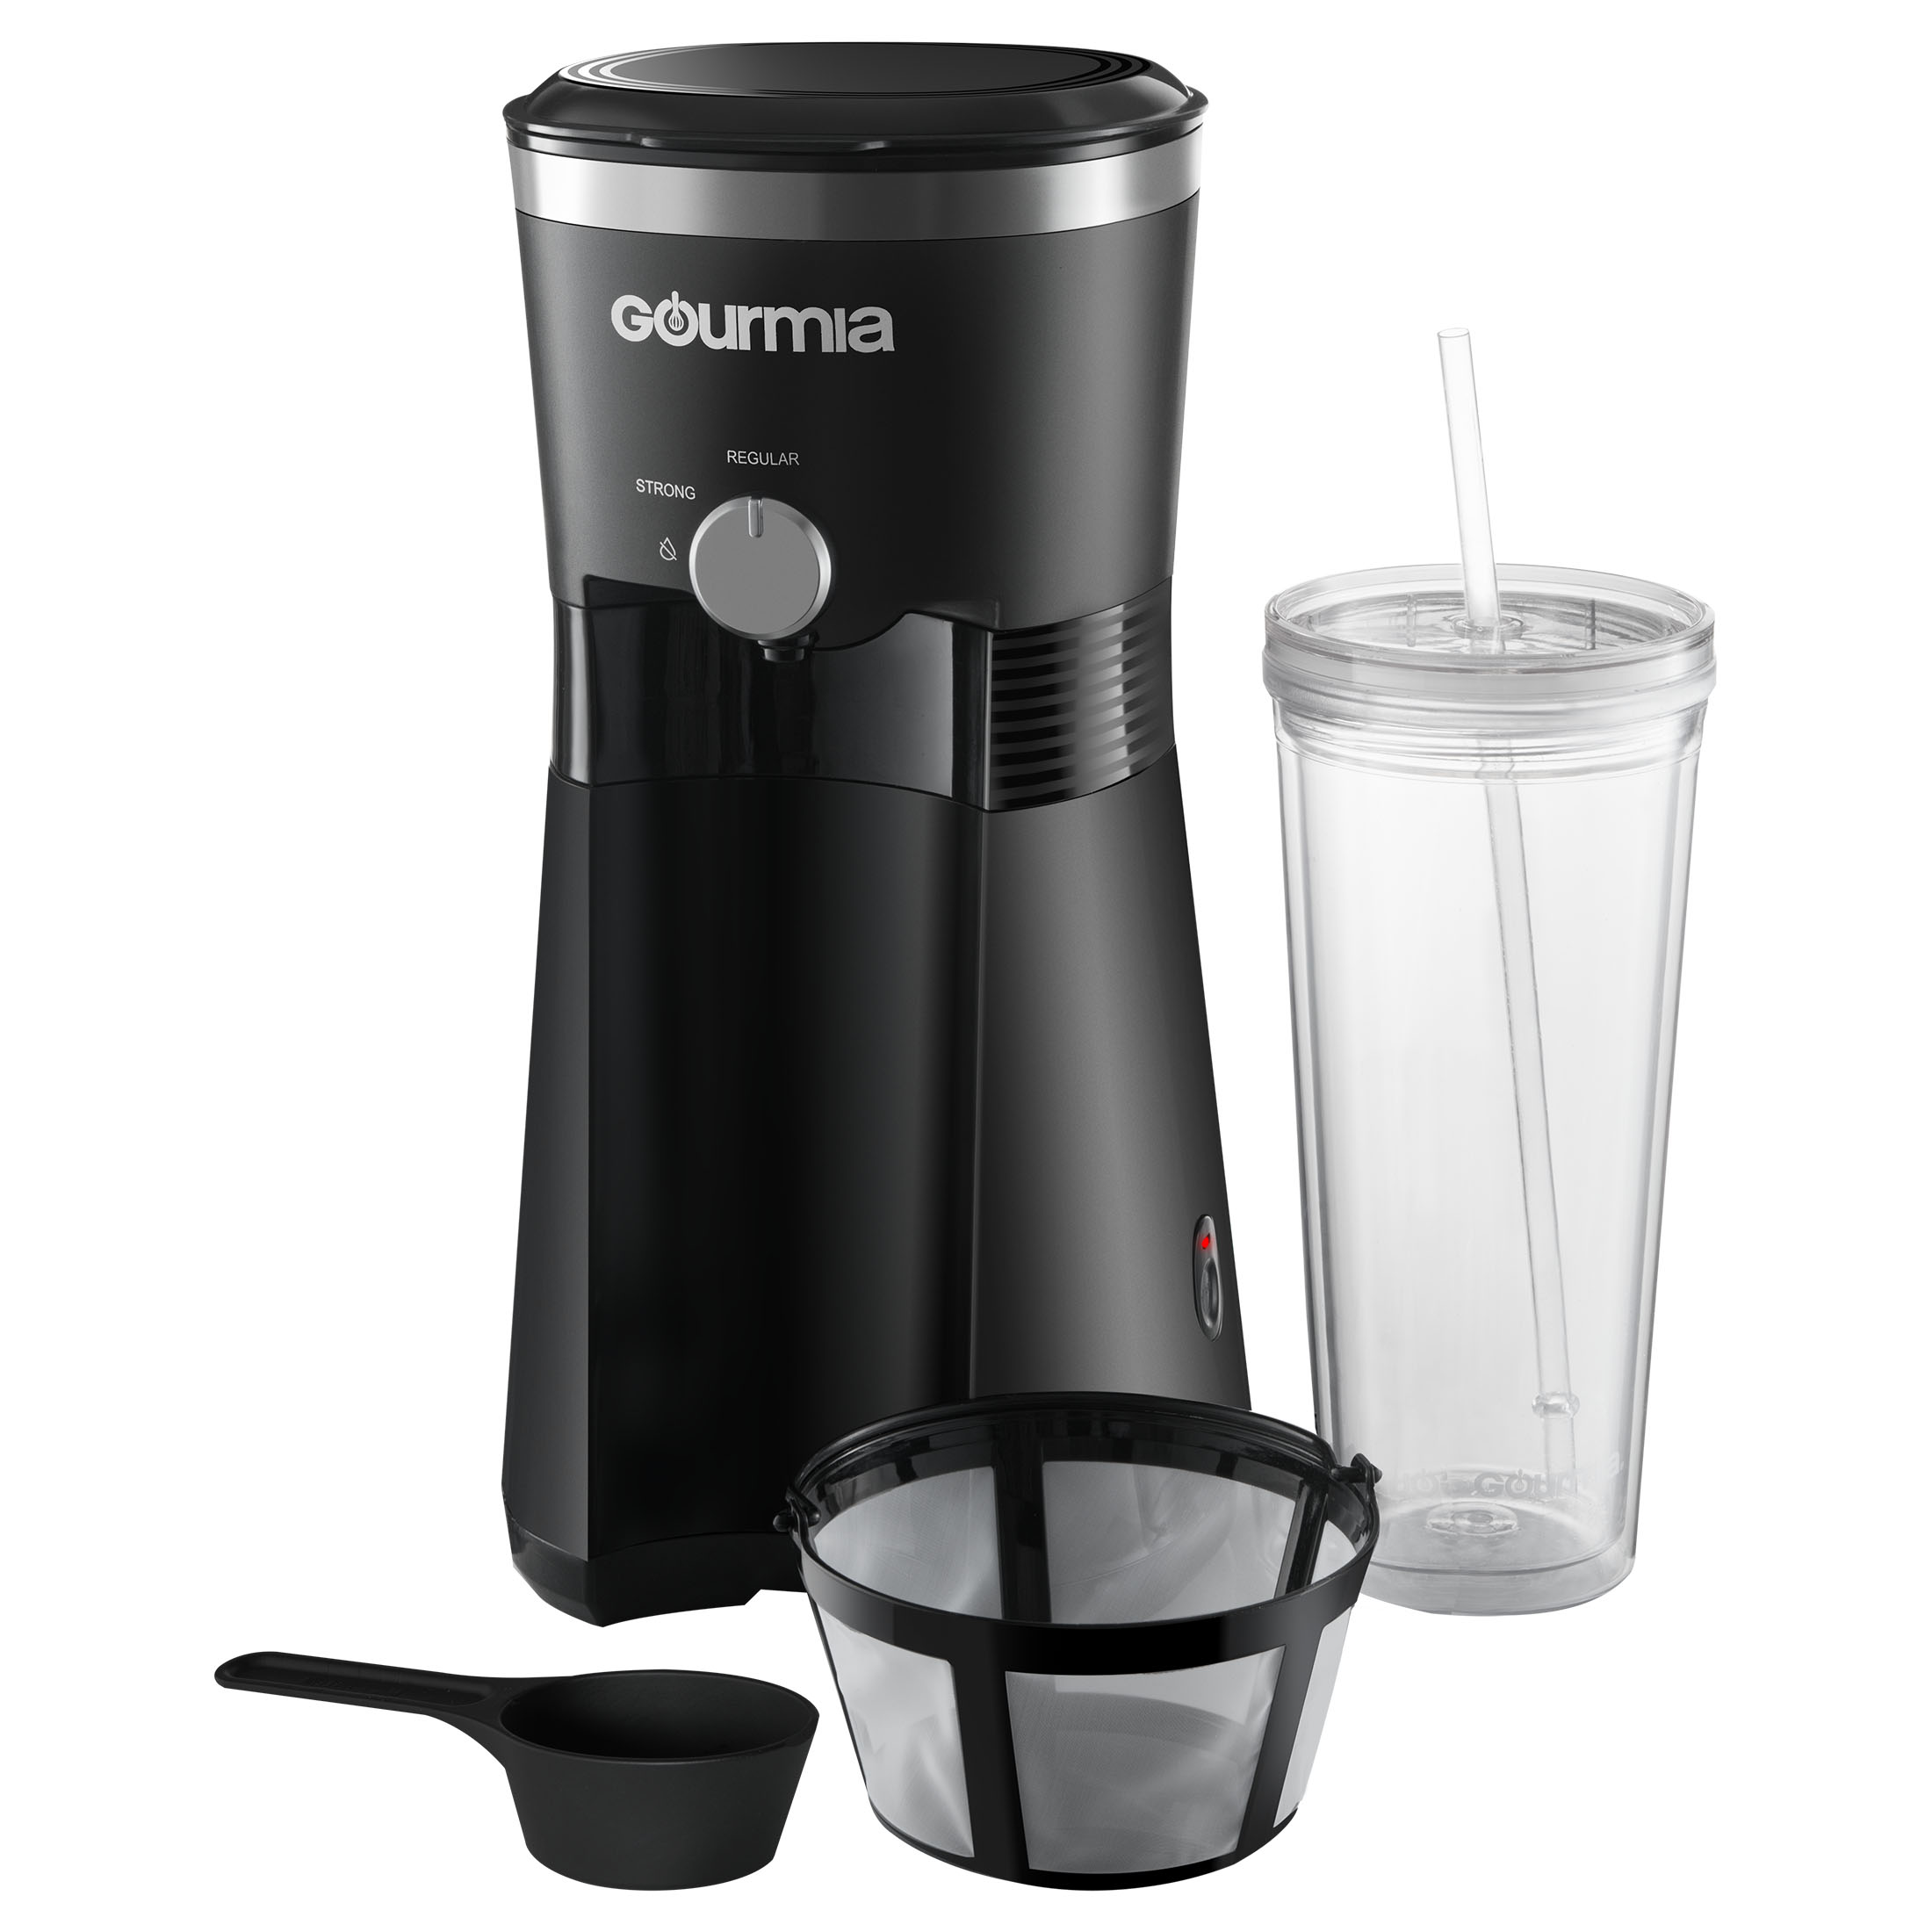 Gourmia Iced Coffee Maker with 25 fl oz. Reusable Tumbler, Black - image 5 of 7